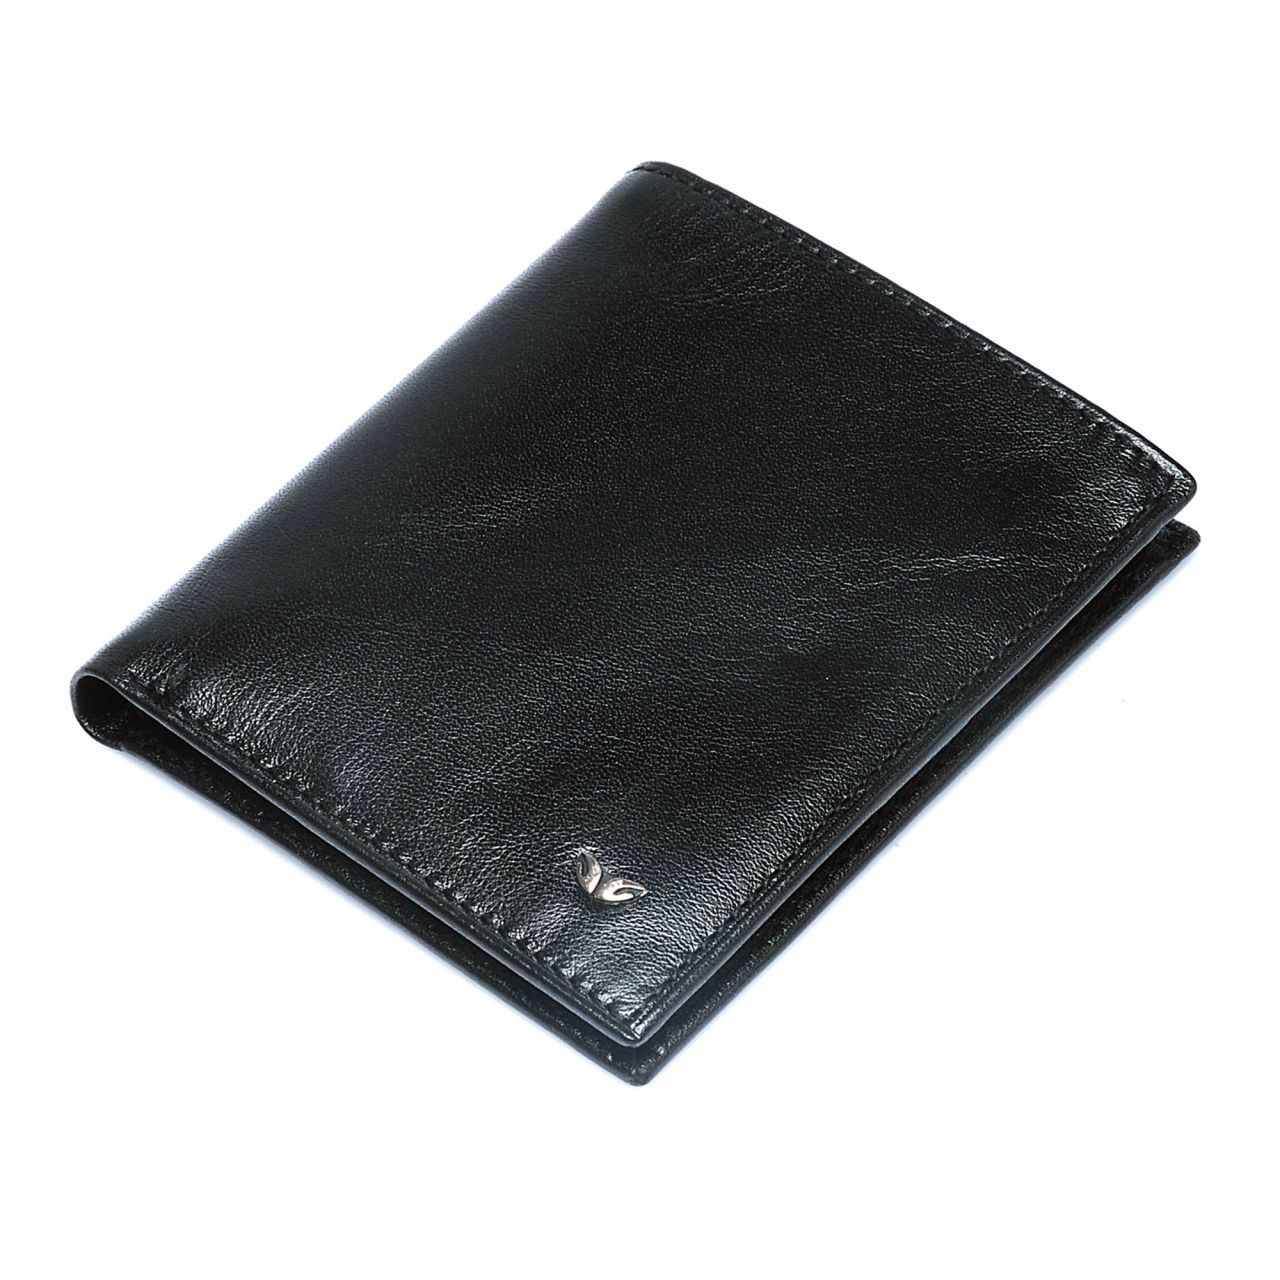 Small men's wallet